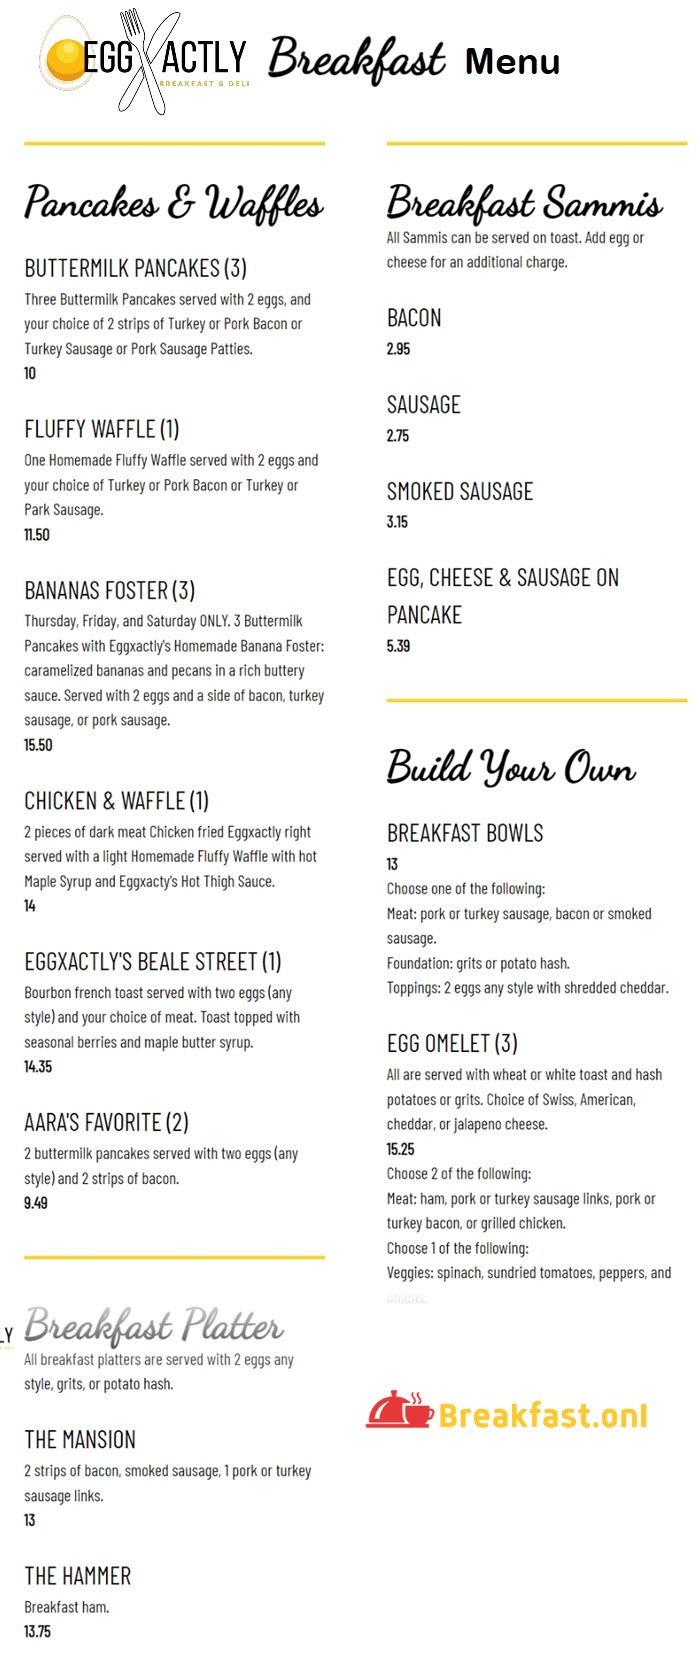 Eggxactly Breakfast & Deli Menu Items with Price